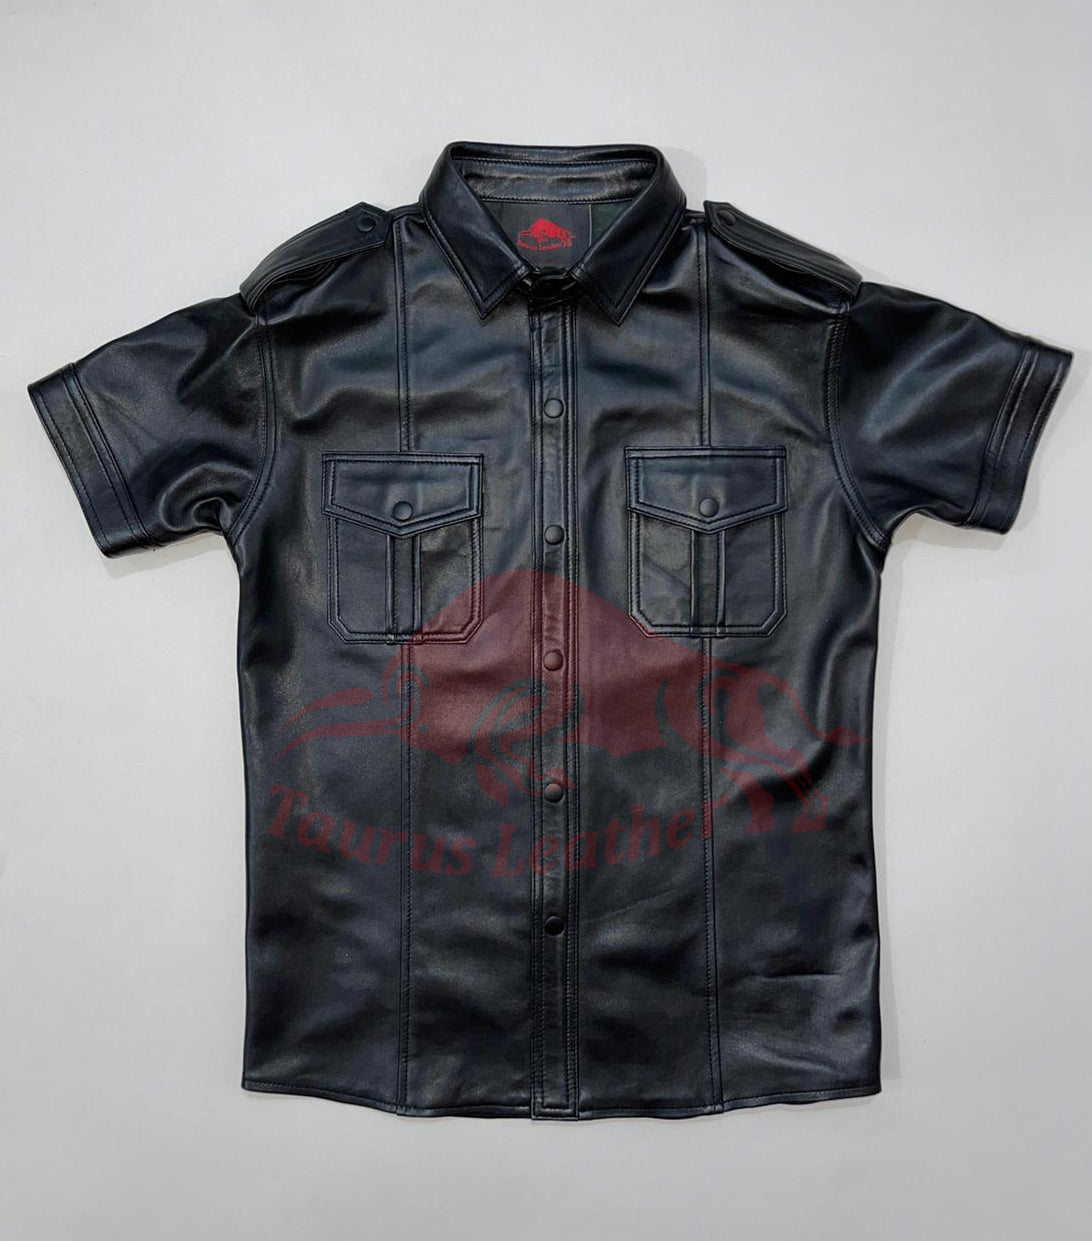 TAURUS LEATHER Black Sheep Leather Police Style Shirt